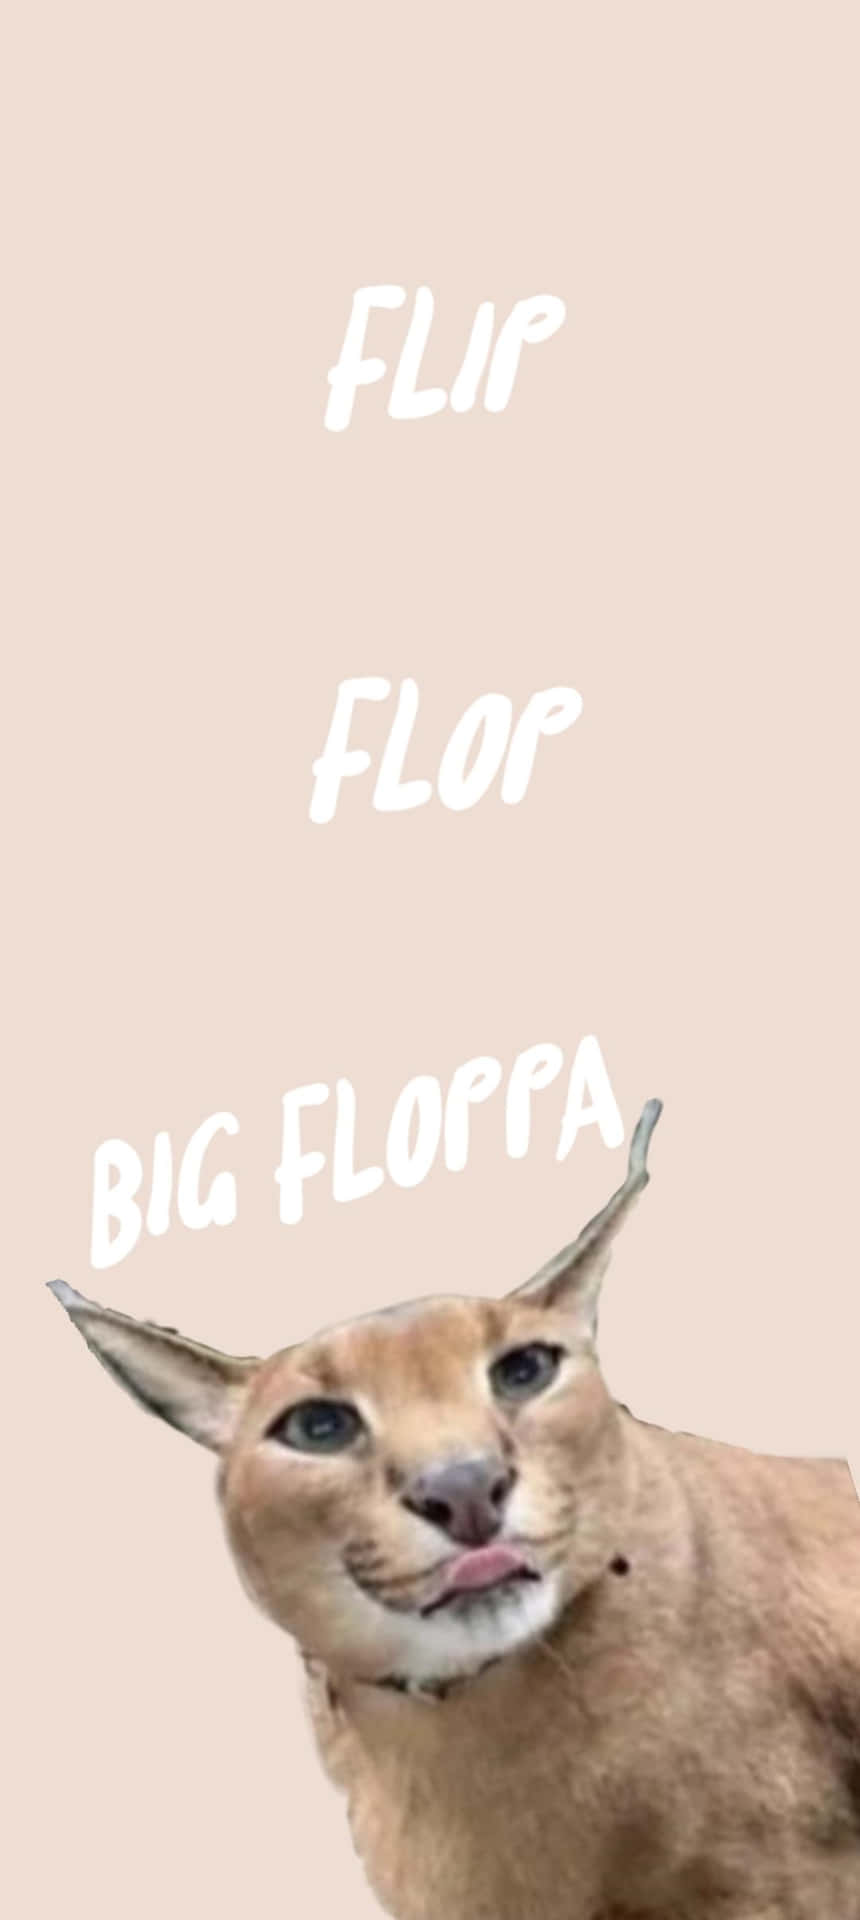 Big Floppa Meme Flip Flop Wallpaper